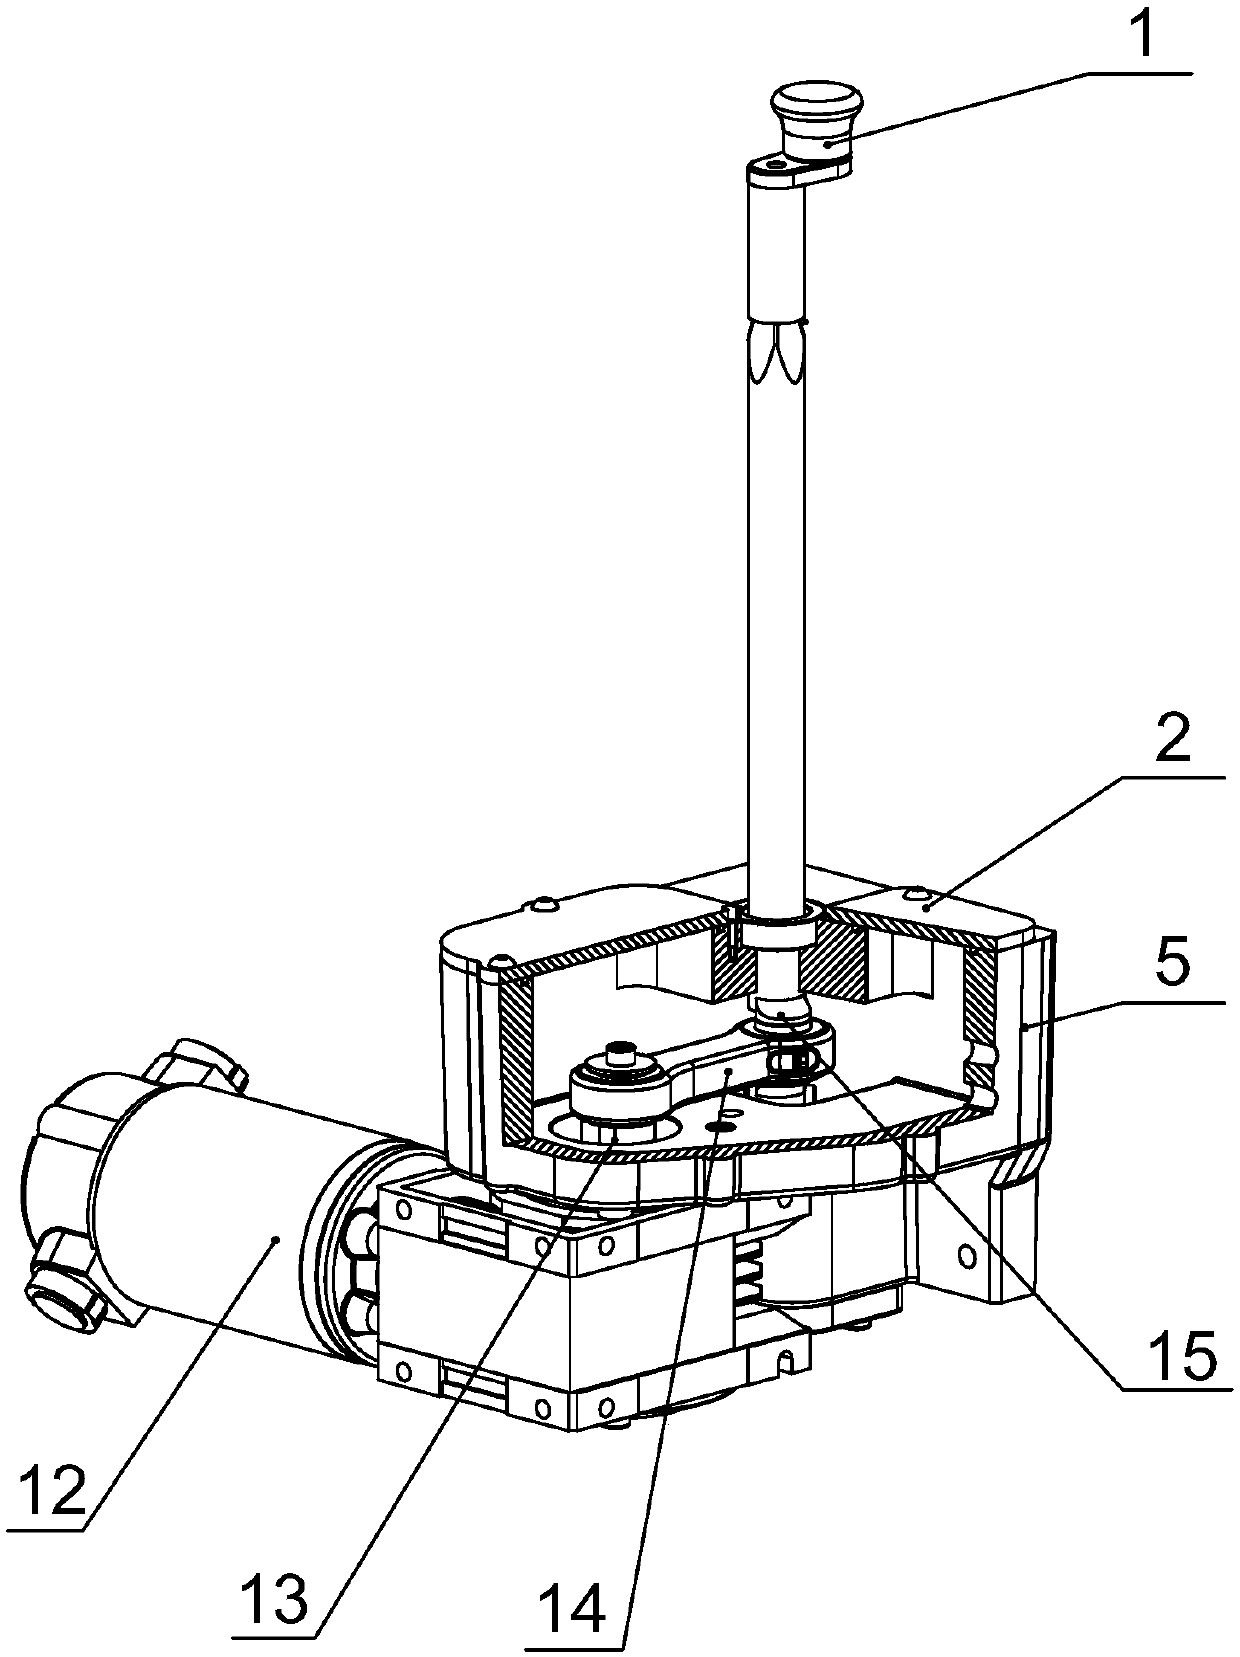 Double-crankshaft forward-reverse reciprocating rotary swing massage flapping mechanism